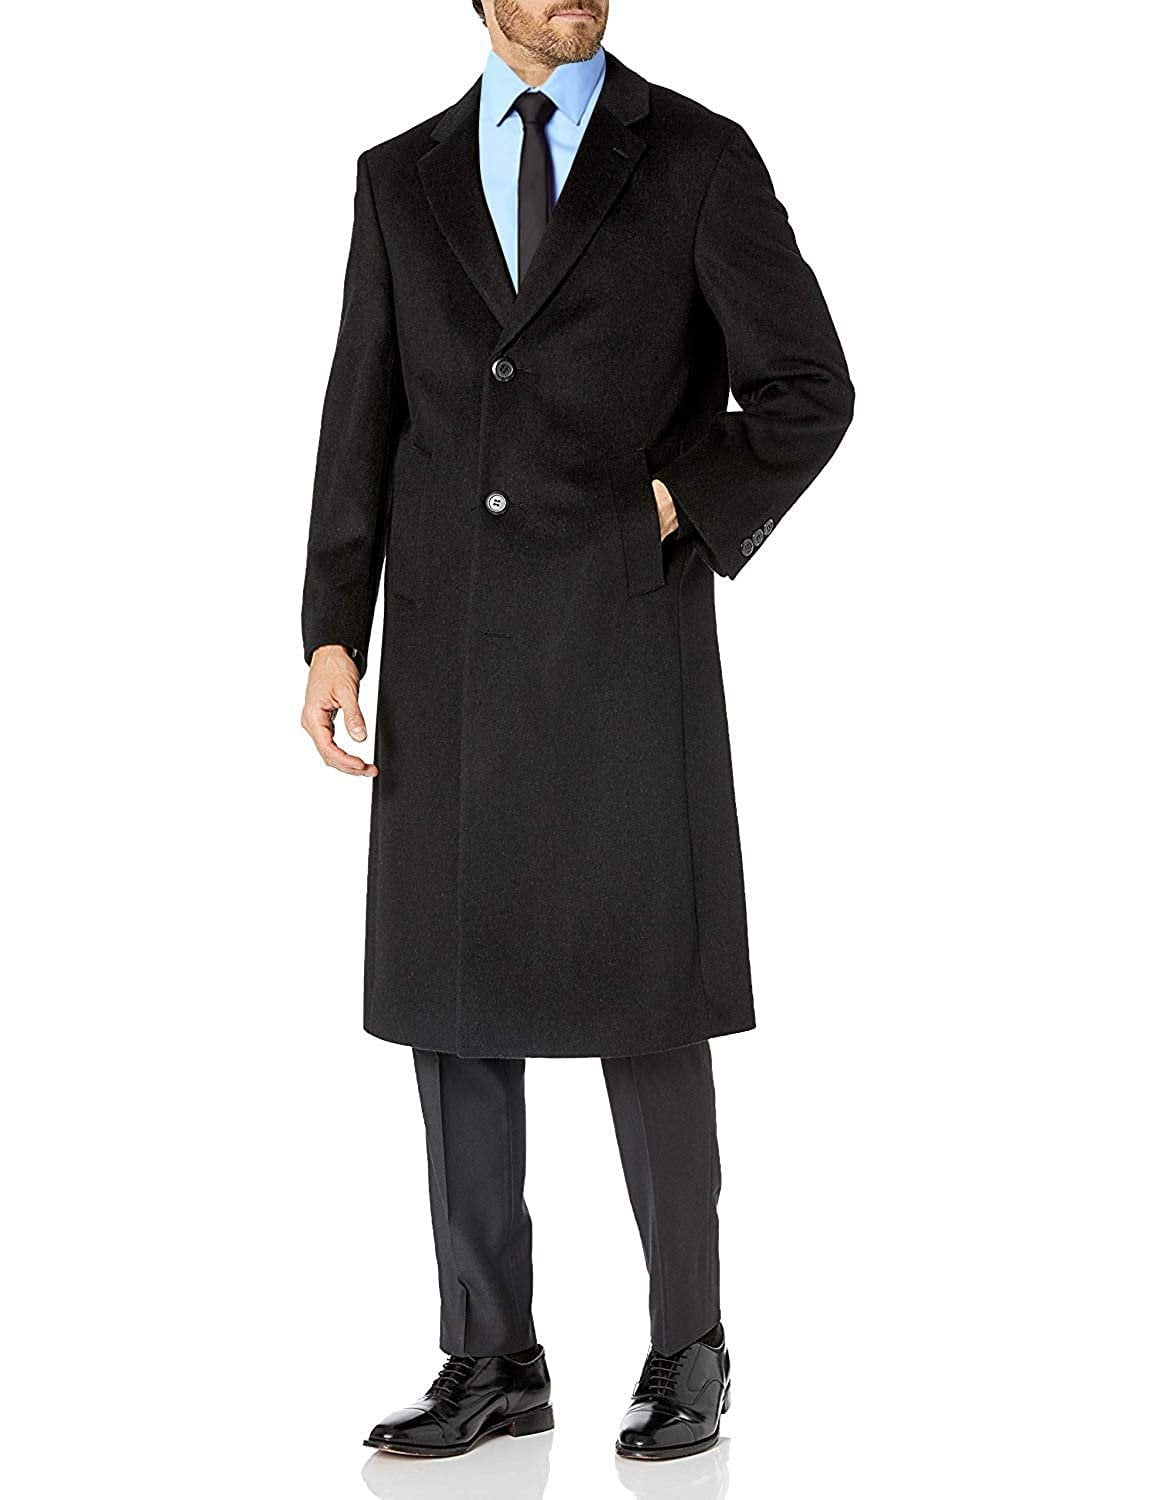 Prontomoda Men's L400913-14 Single Breasted Black Luxury Wool